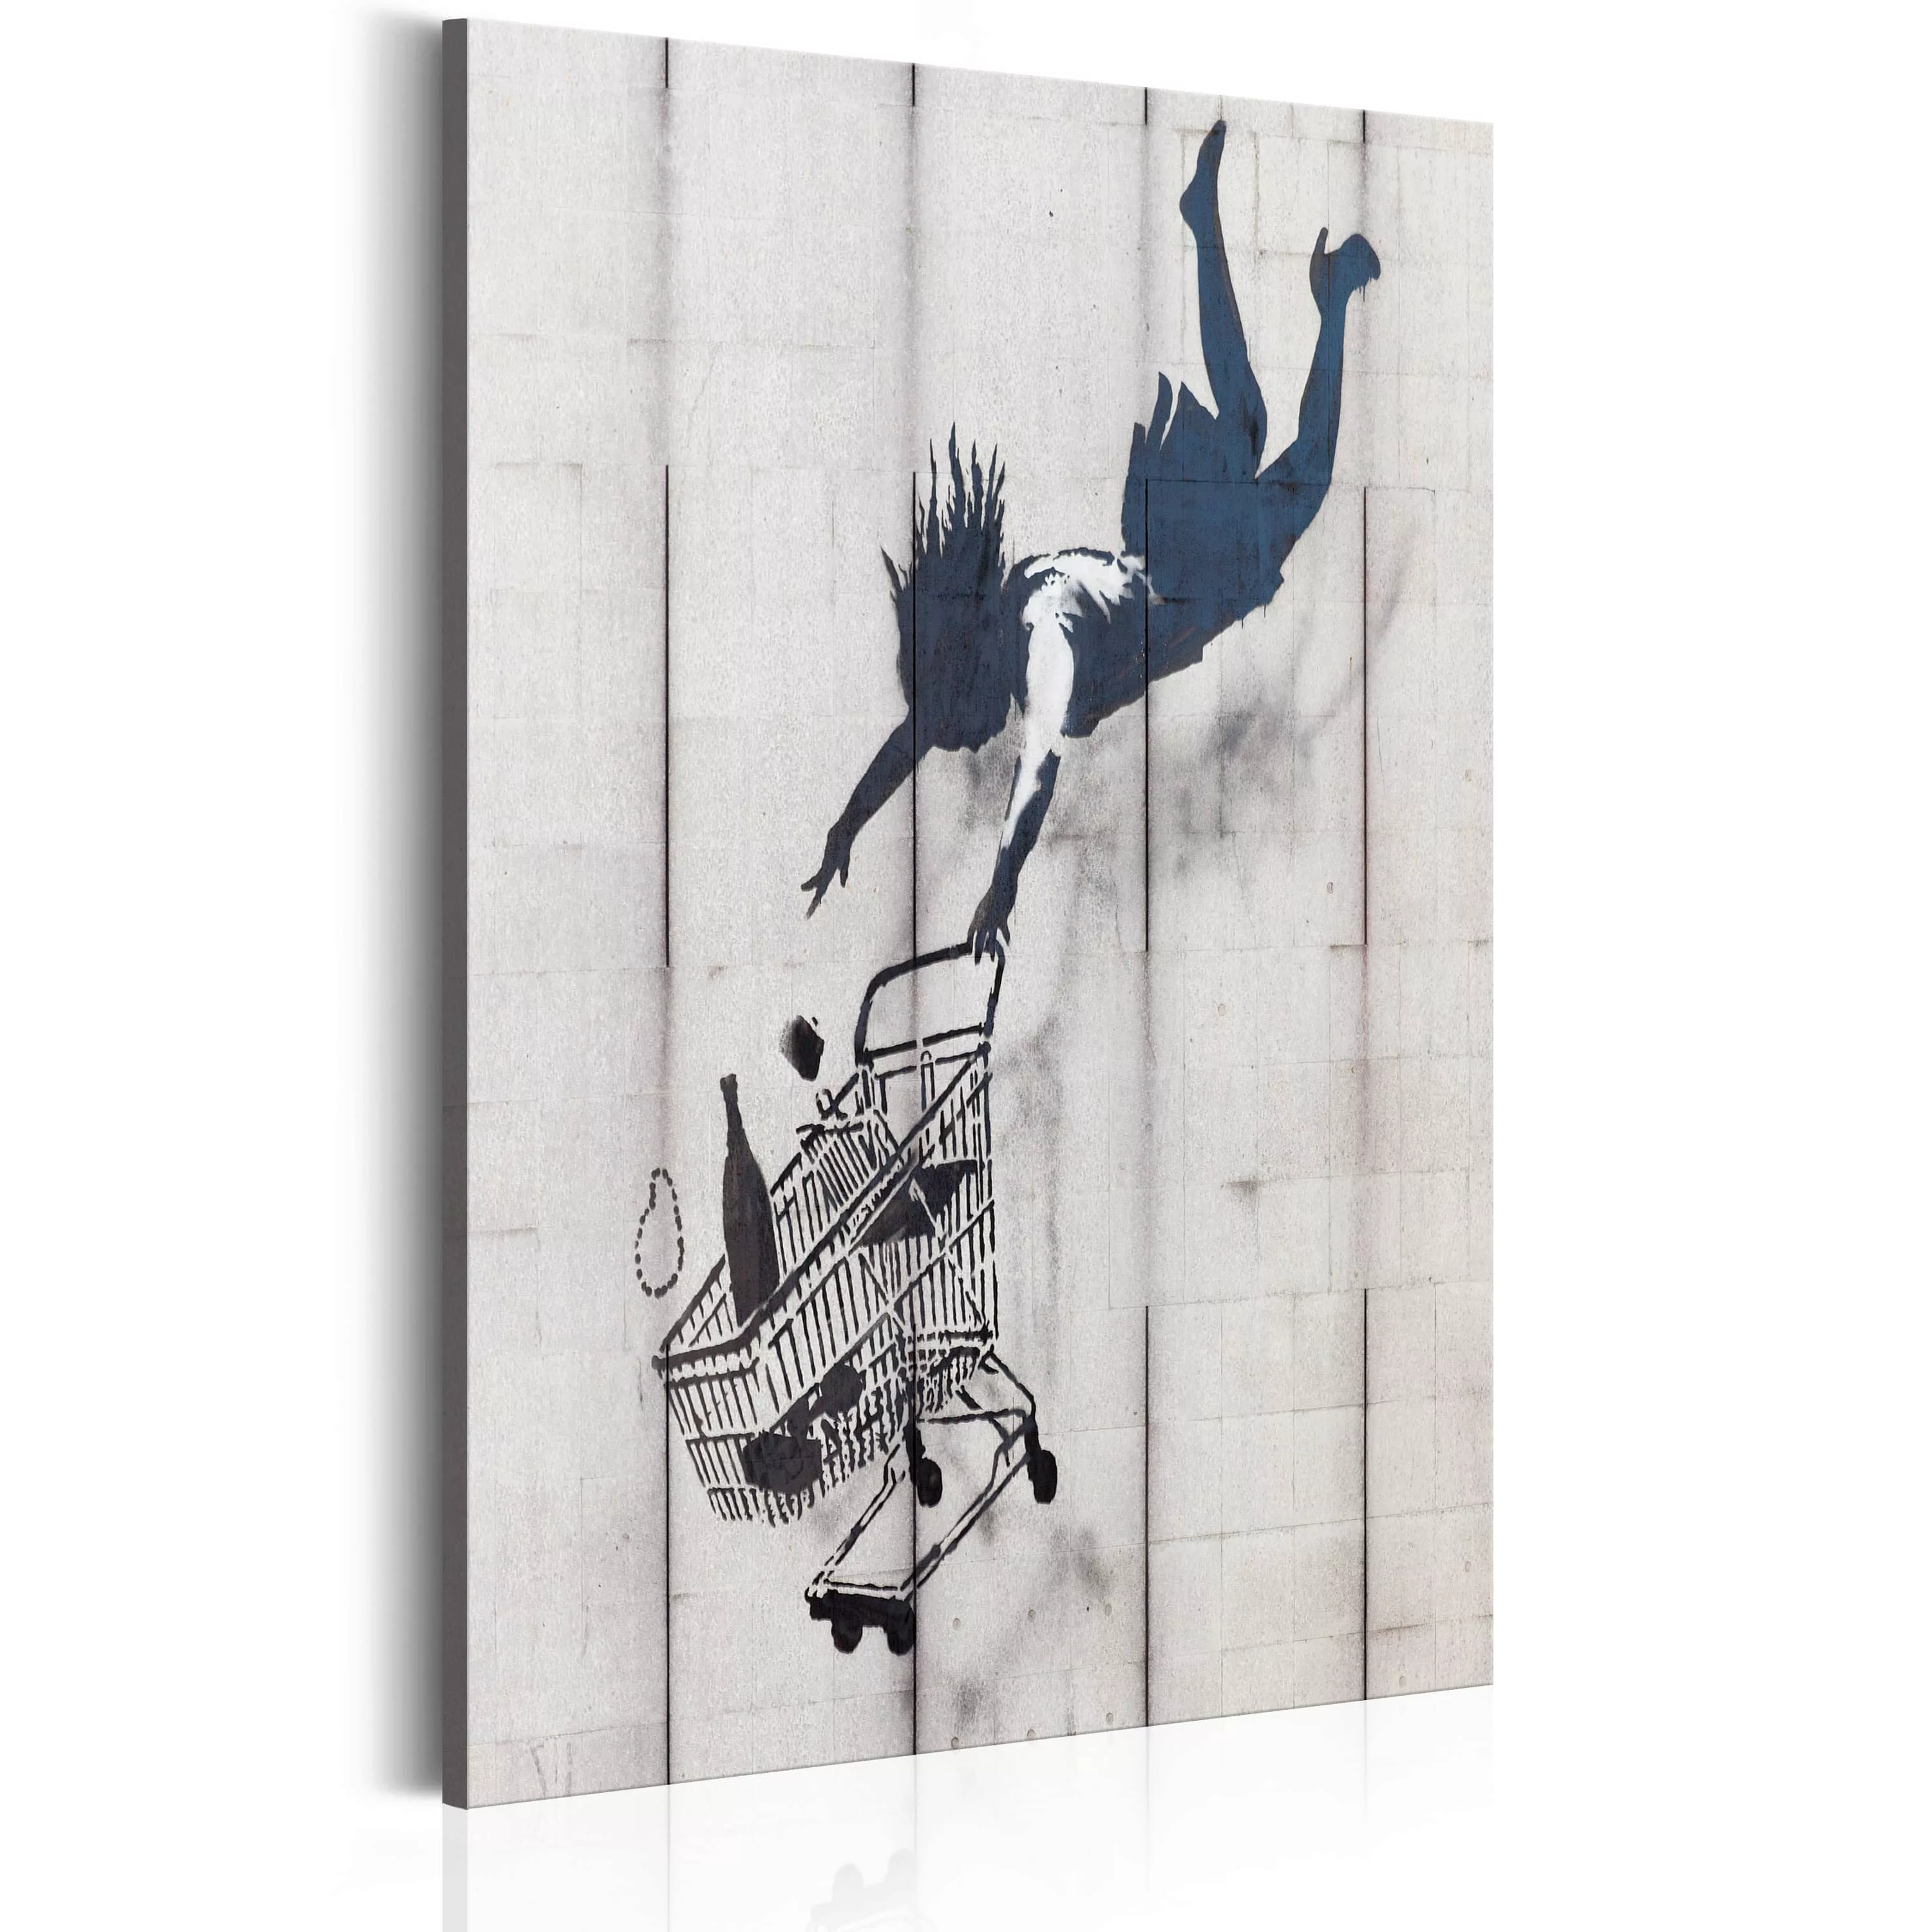 Wandbild - Shop Til You Drop by Banksy günstig online kaufen